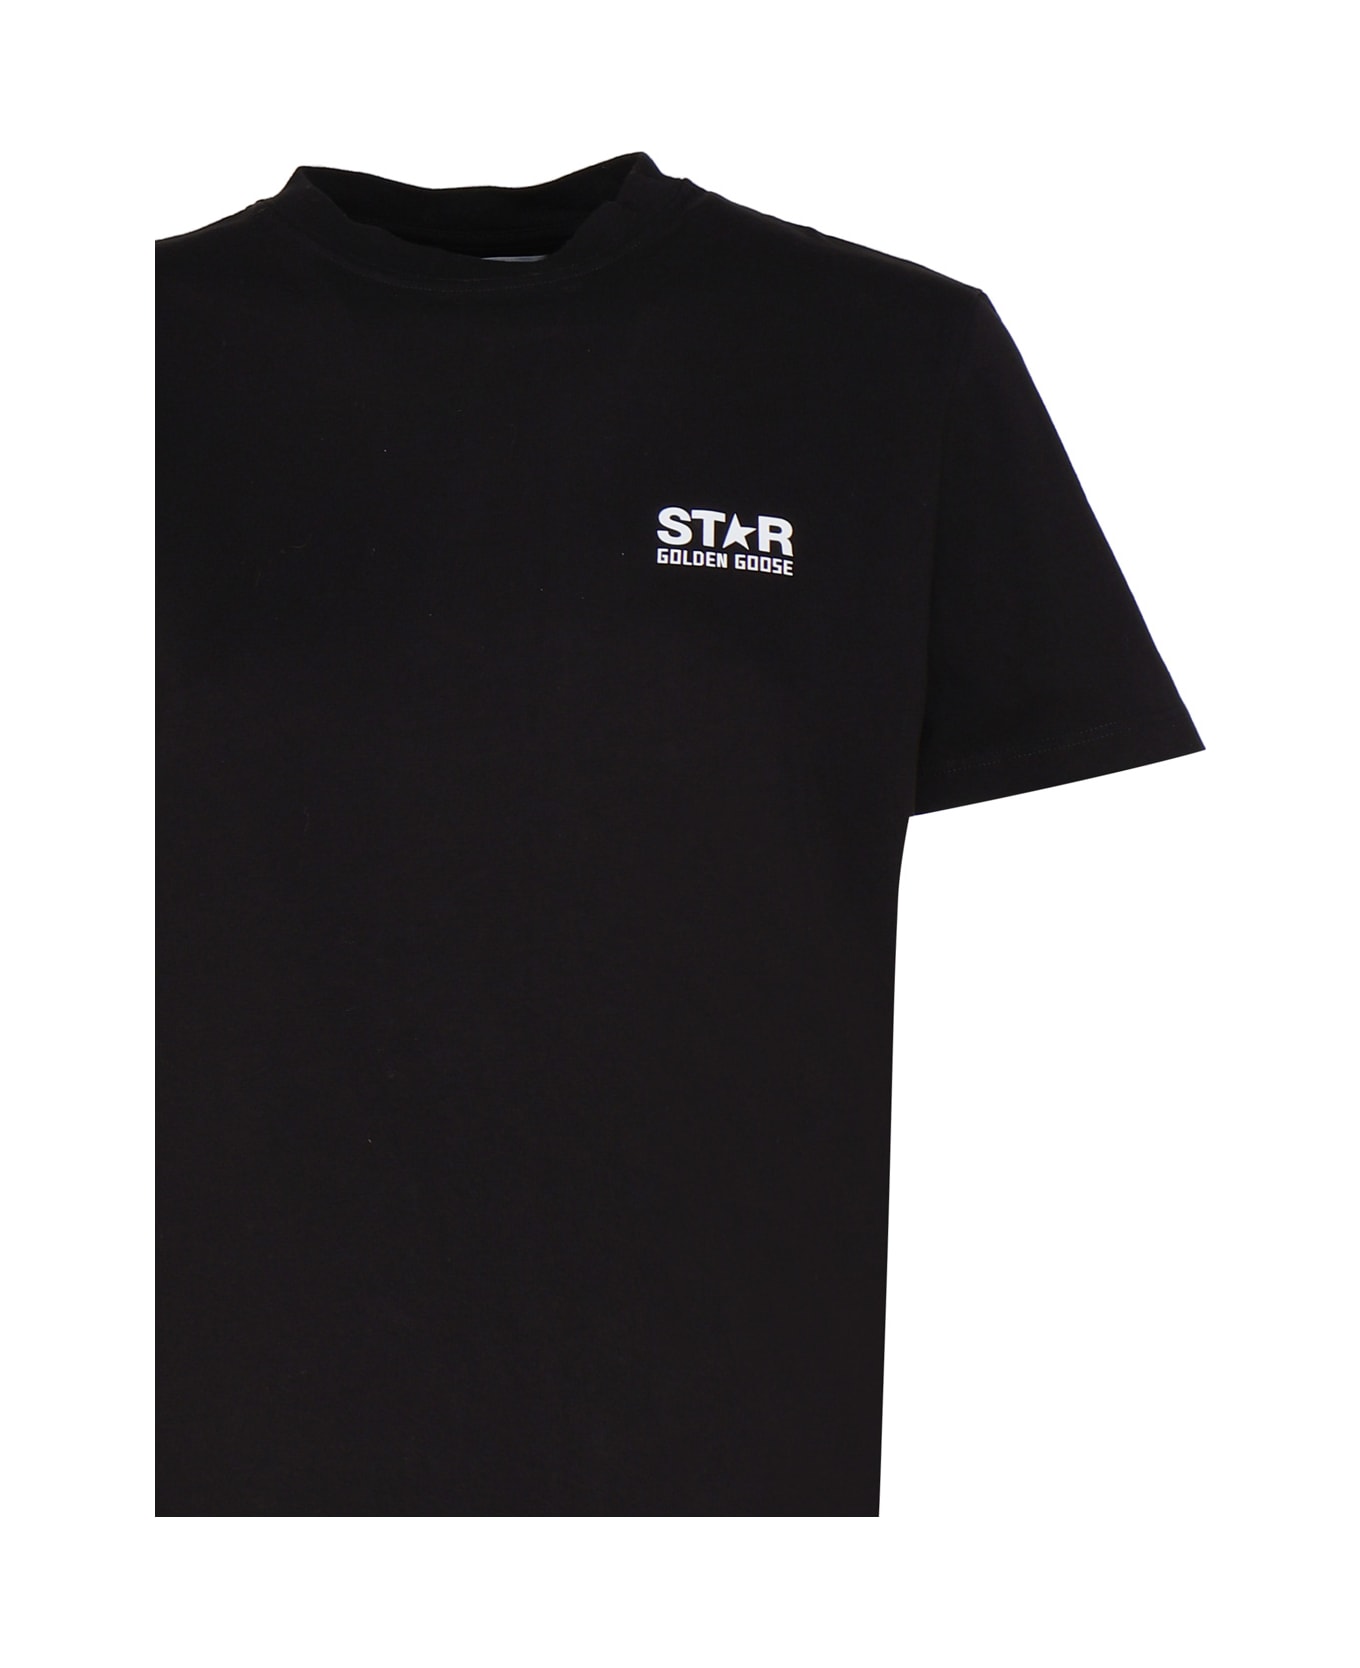 Golden Goose Star T-shirt - Black